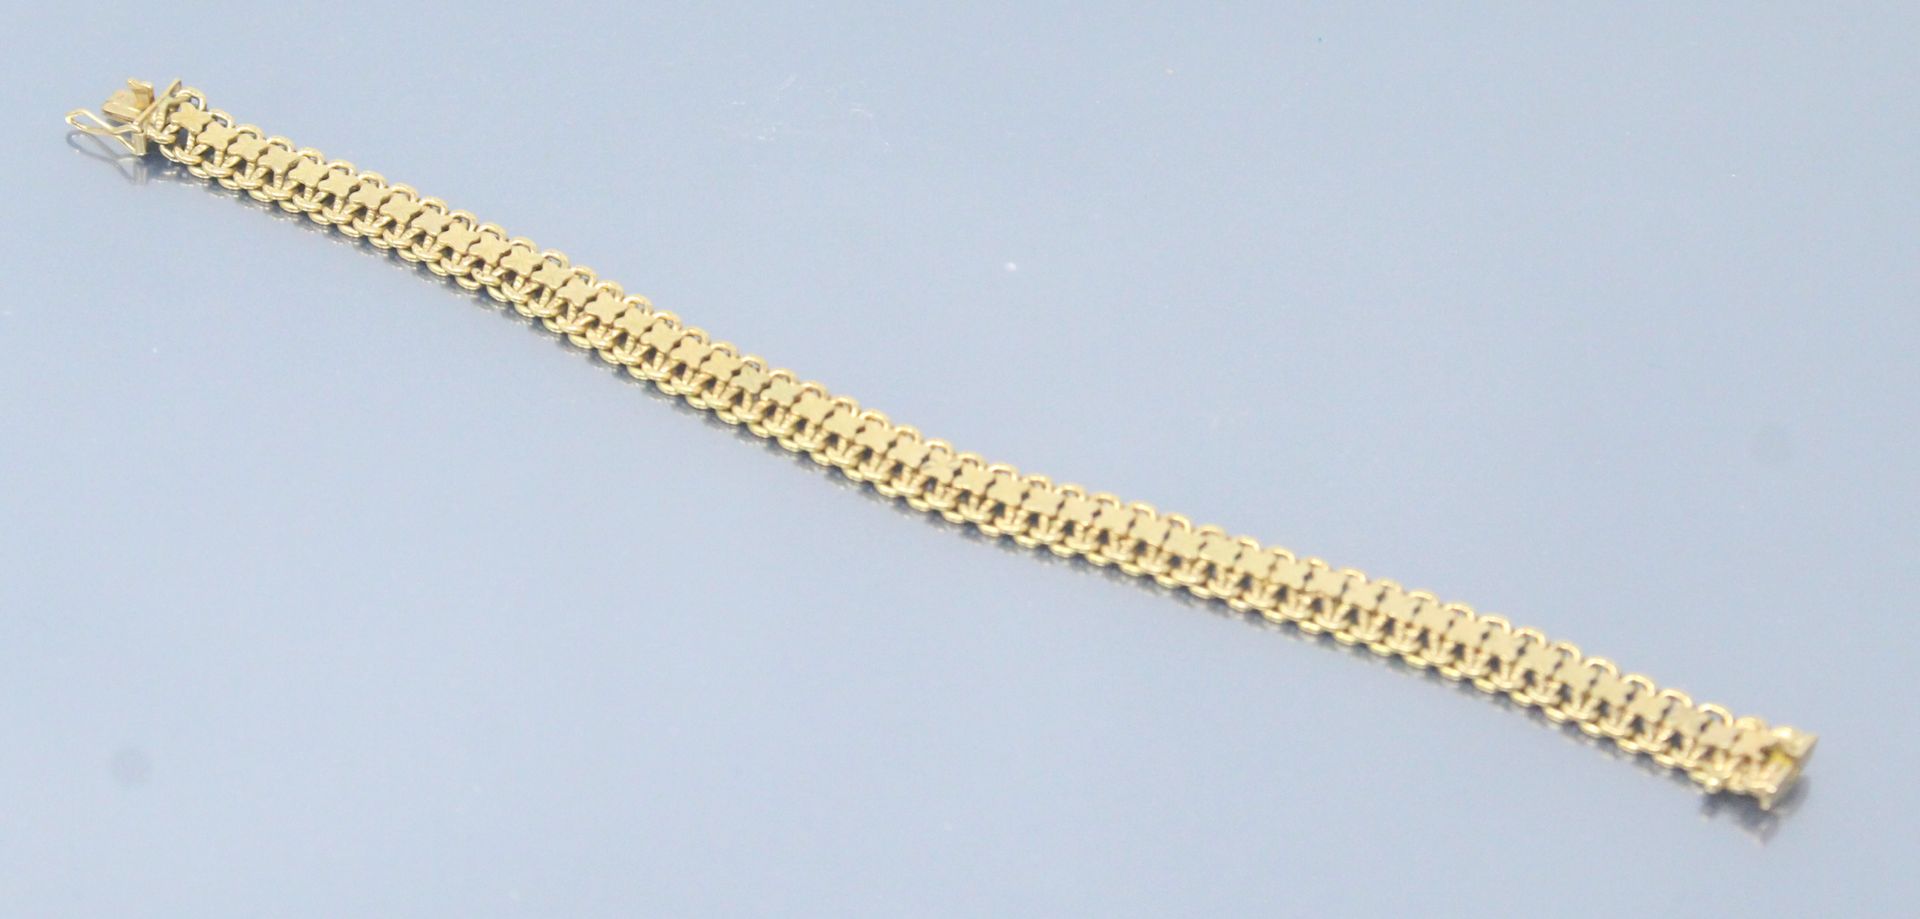 Null 18k (750) yellow gold bracelet with fancy mesh.

Eagle head hallmark. 

Wri&hellip;